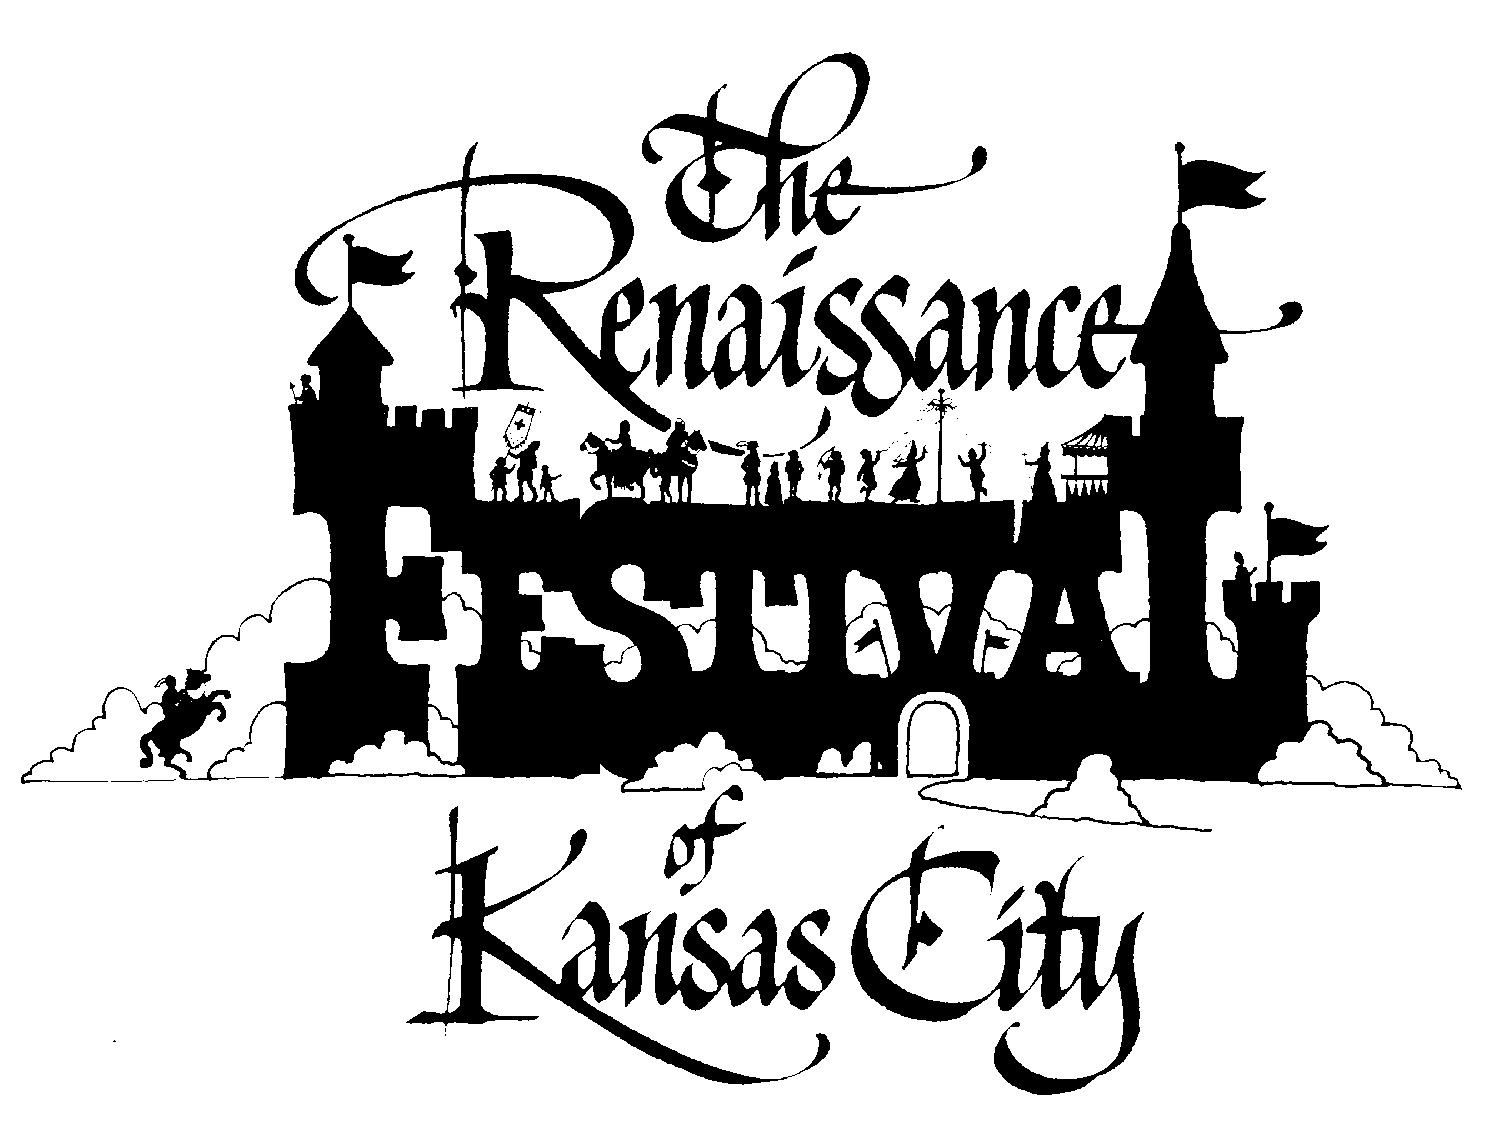 Celebrating Their 36th Festival The Kansas City Renaissance Festival